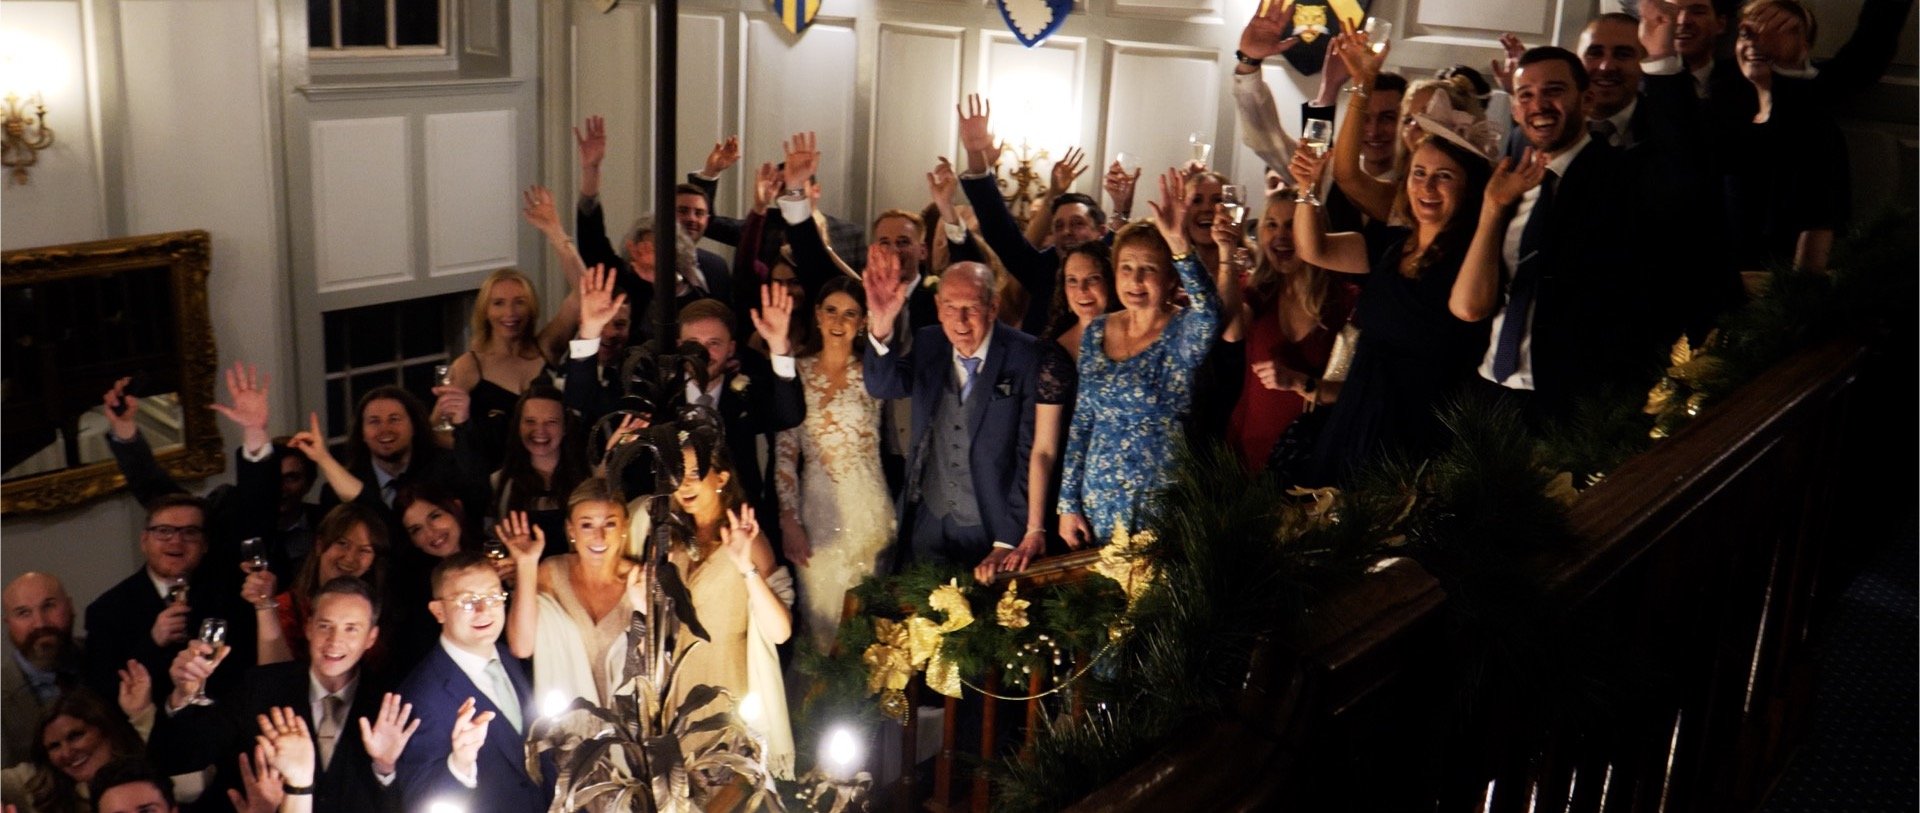 Wedding guests at Gosfield Hall Essex video.jpg